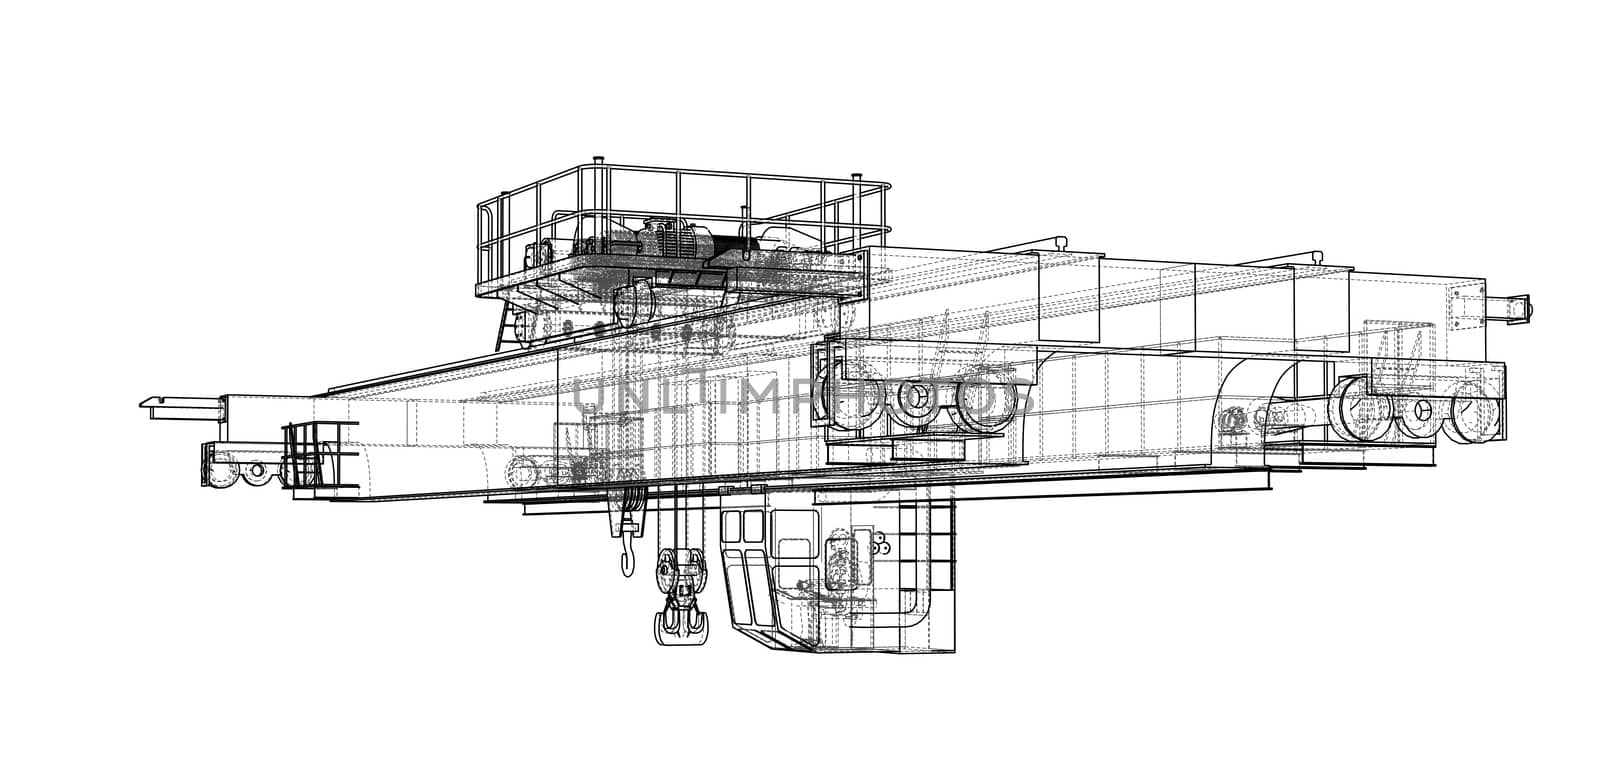 Overhead crane sketch by cherezoff